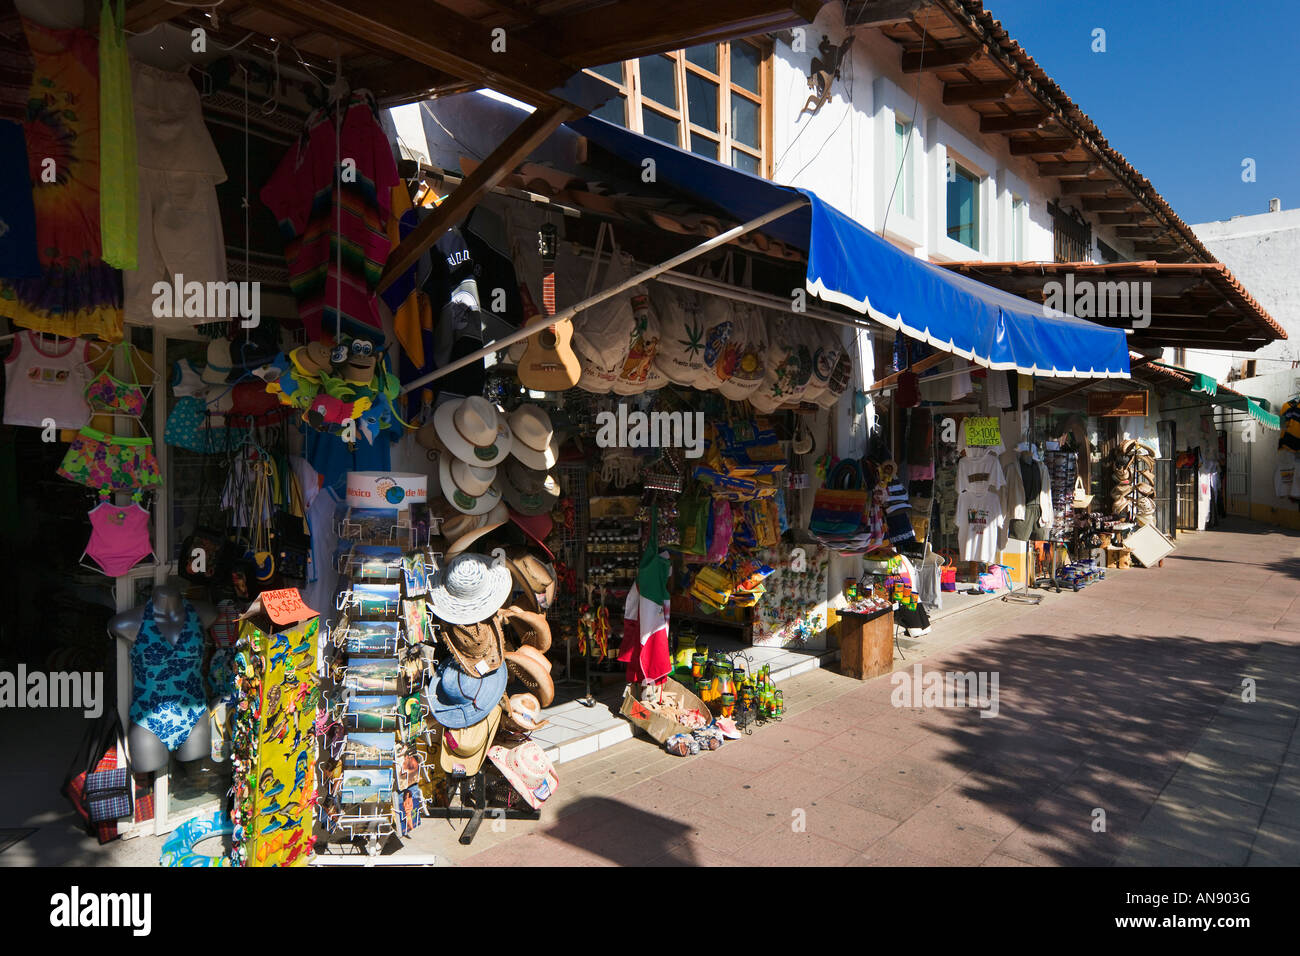 Shops in Plaza Malecon Flea Market, Malecon, Old Town, Puerto Vallarta, Jalisco, Mexico Stock Photo